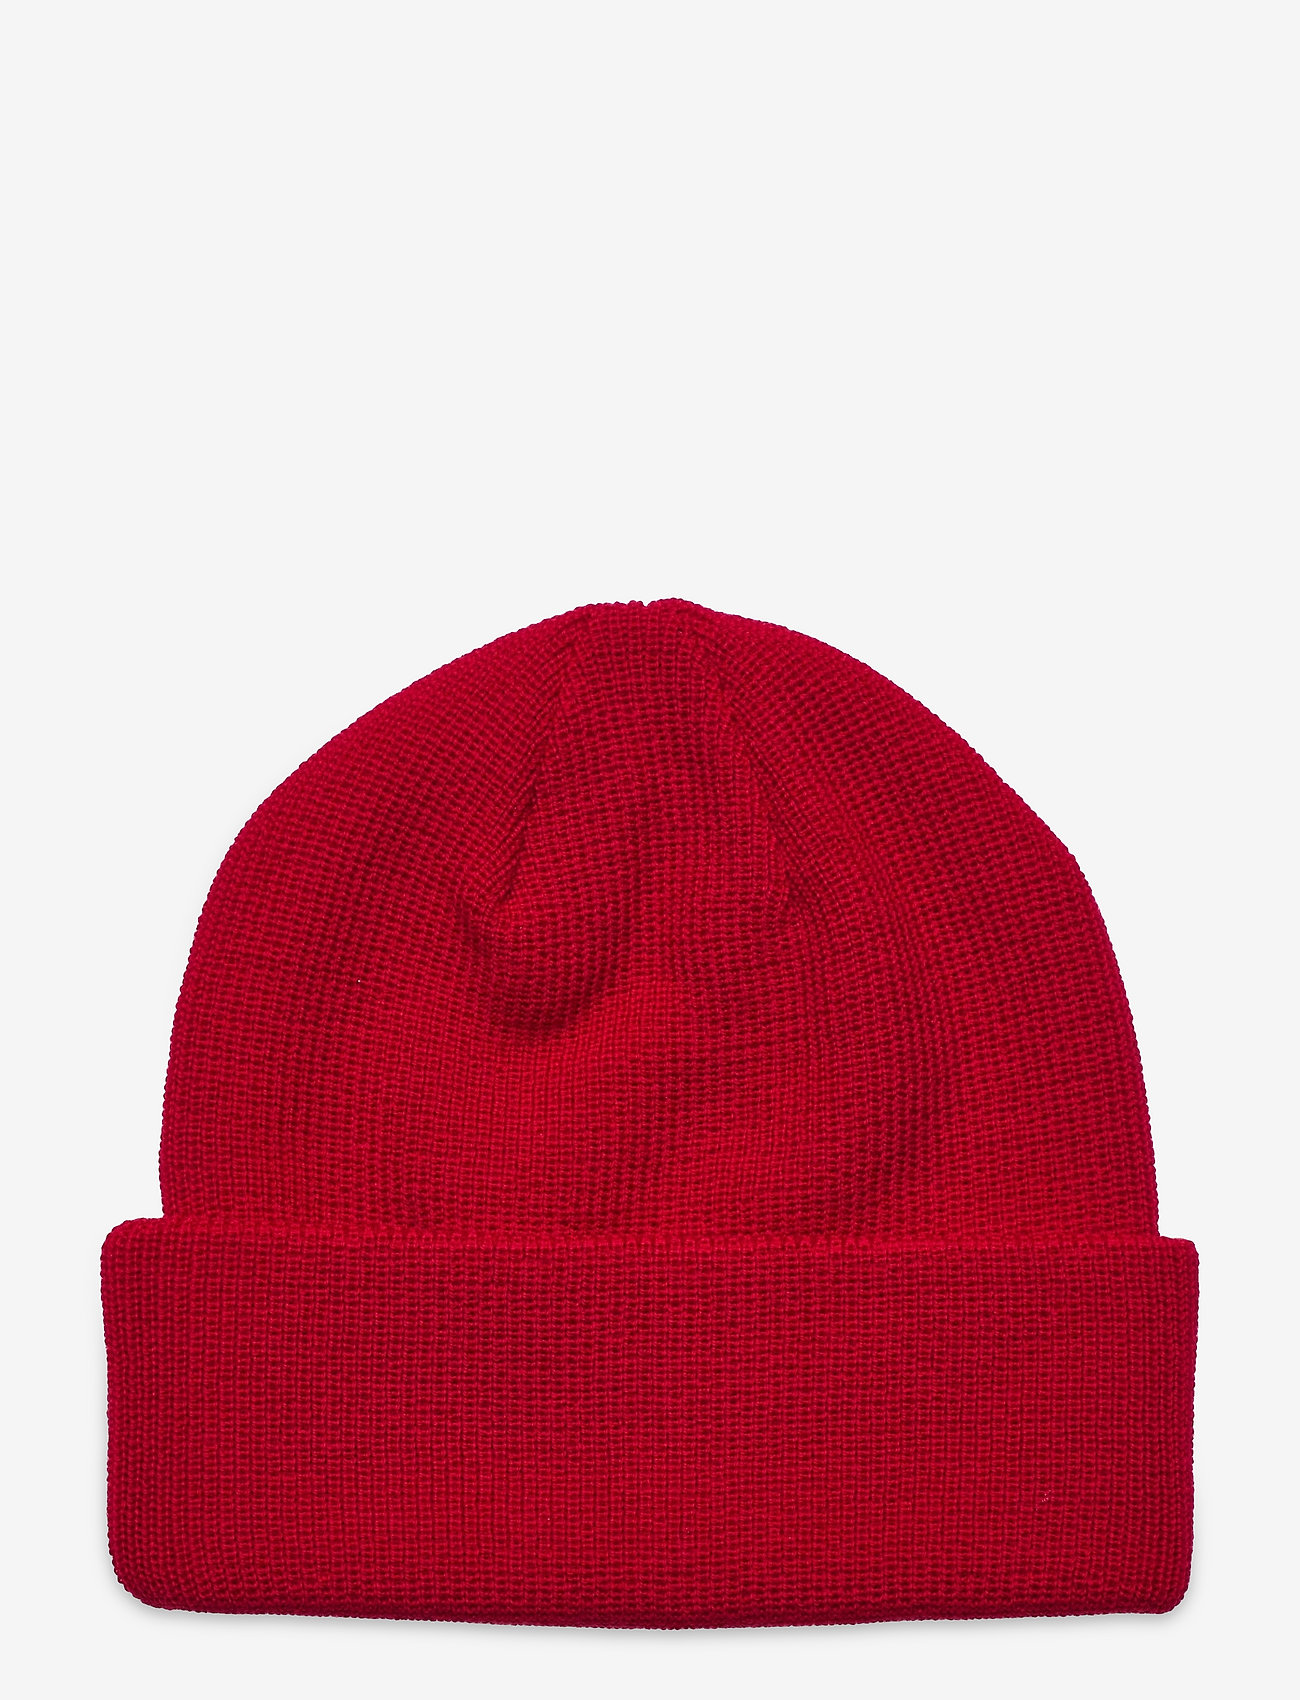 Makia - Merino Thin Cap - czapka - red - 1